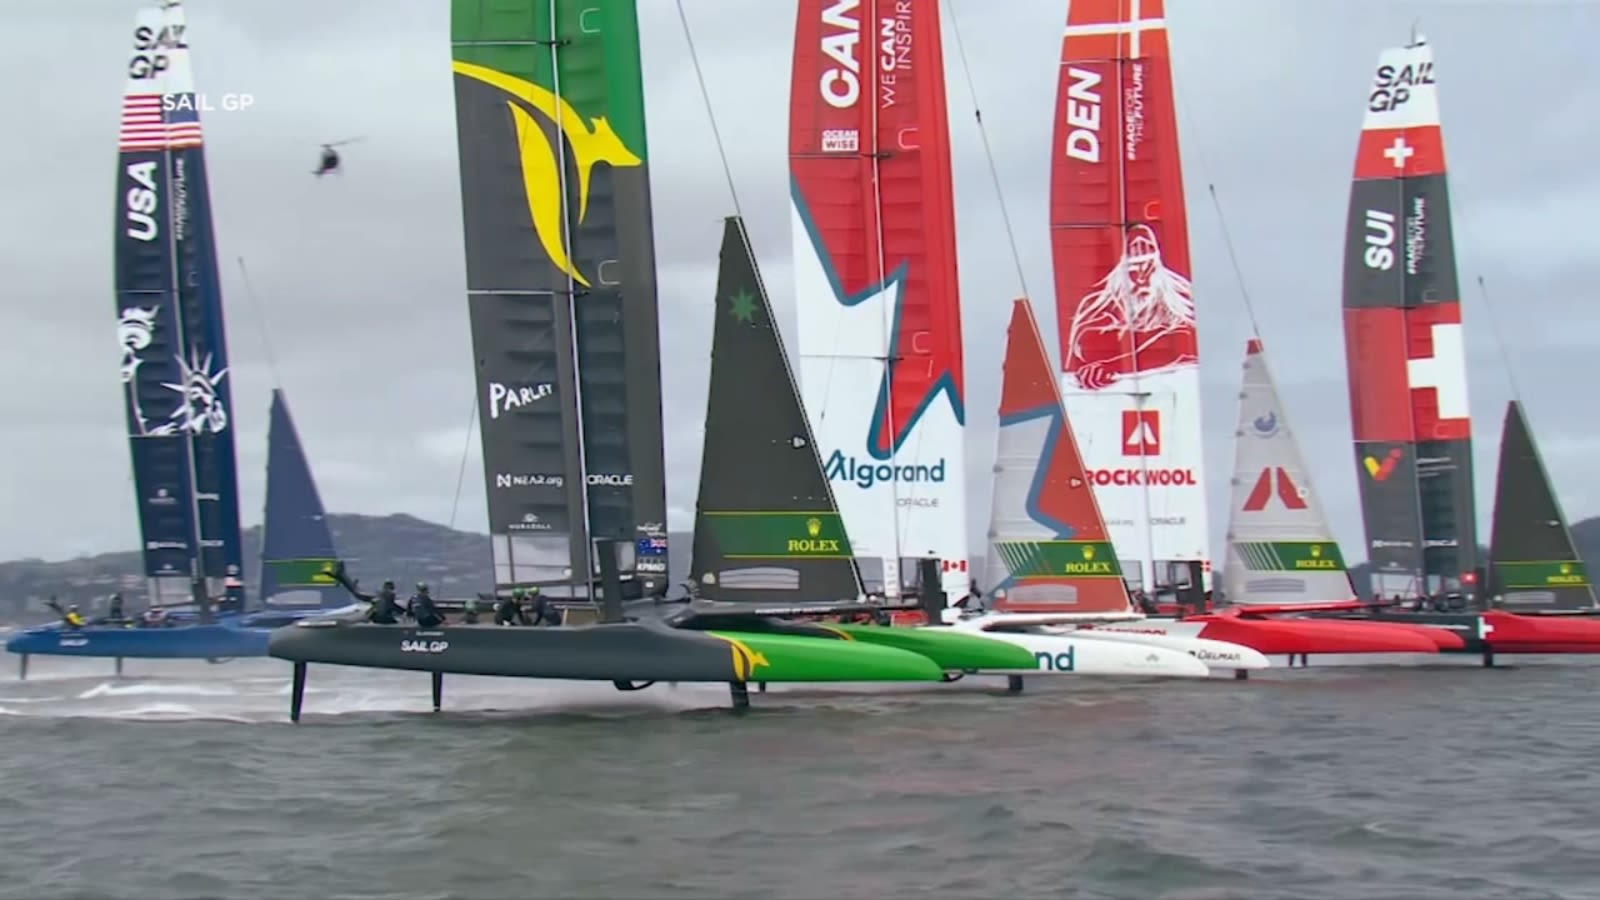 SailGP grand finale kicks off in San Francisco Bay this weekend